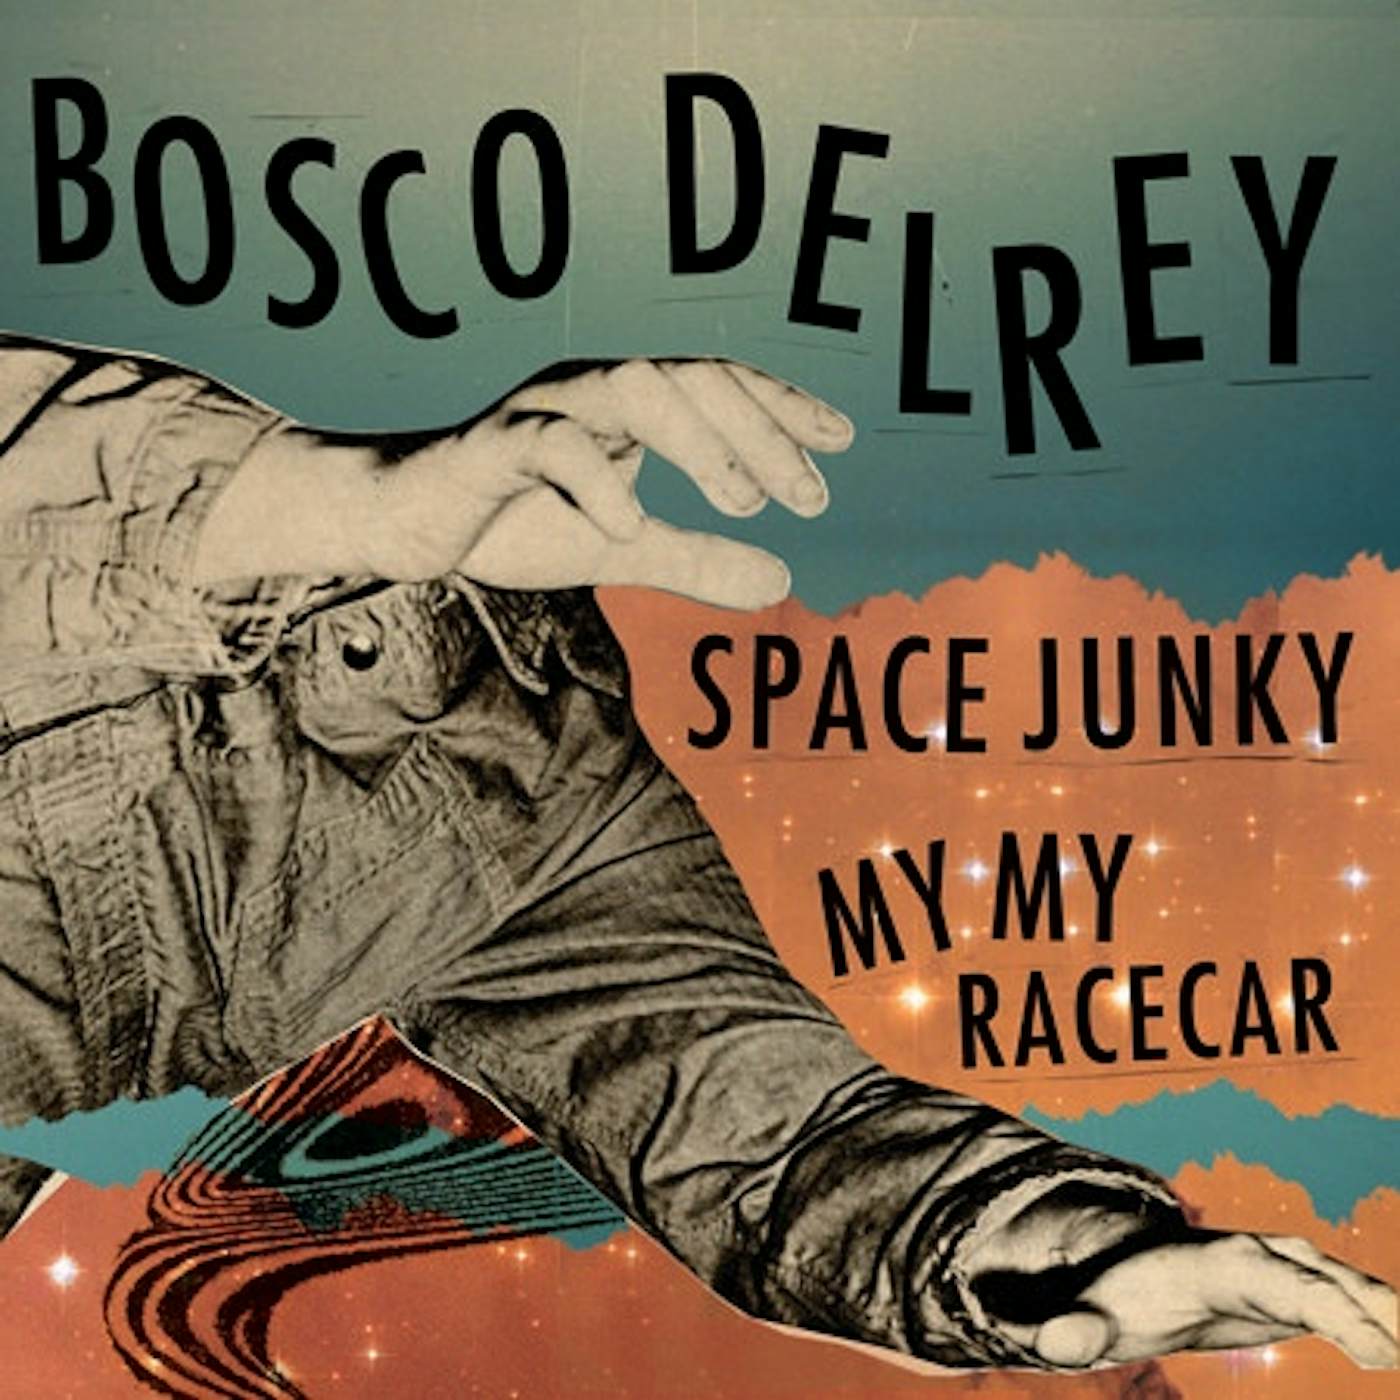 Bosco Delrey Space Junky / My My Racecar Vinyl Record